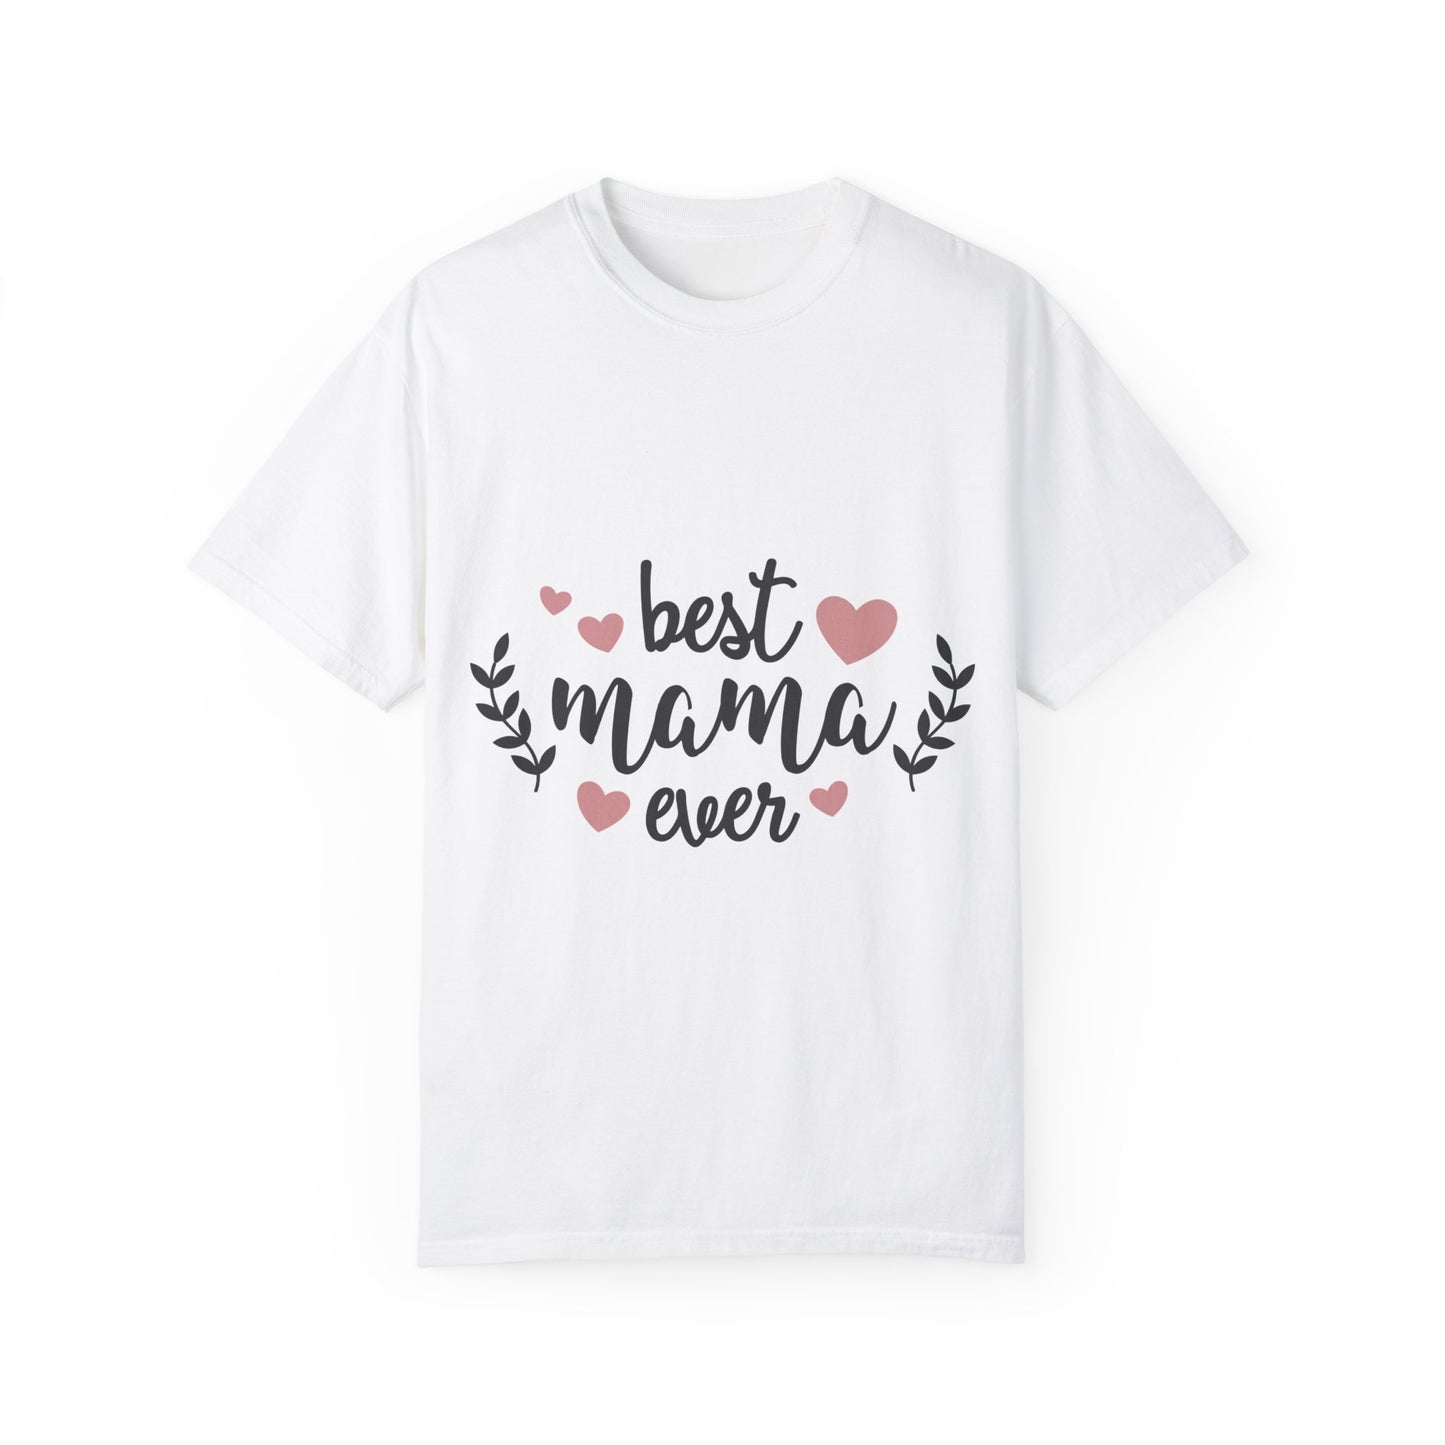 Best mom ever - Unisex Garment-Dyed T-shirt